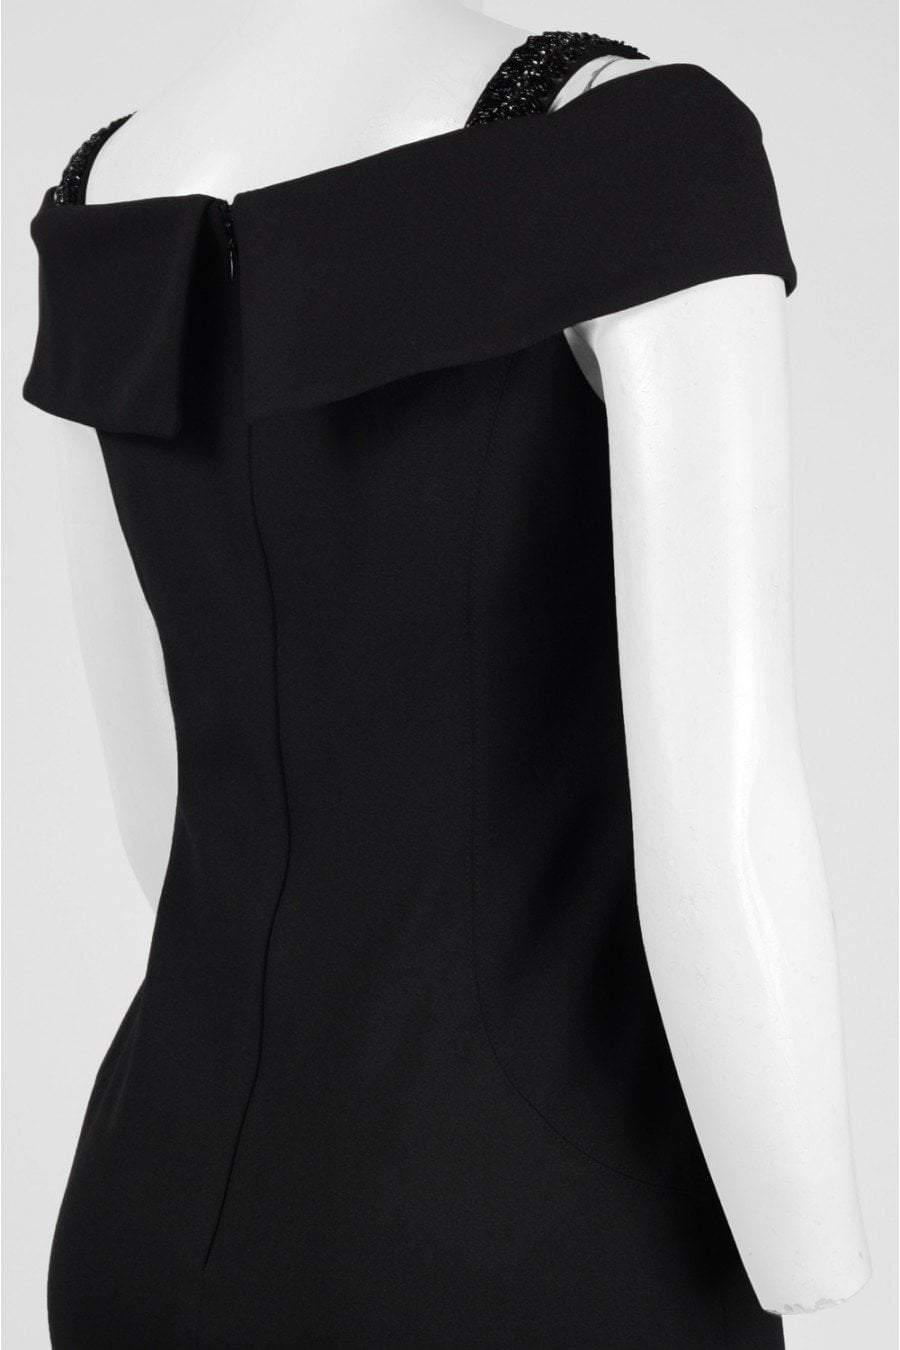 Adrianna Papell - AP1E201555 Embellished Off-shoulder Sheath Dress In Black